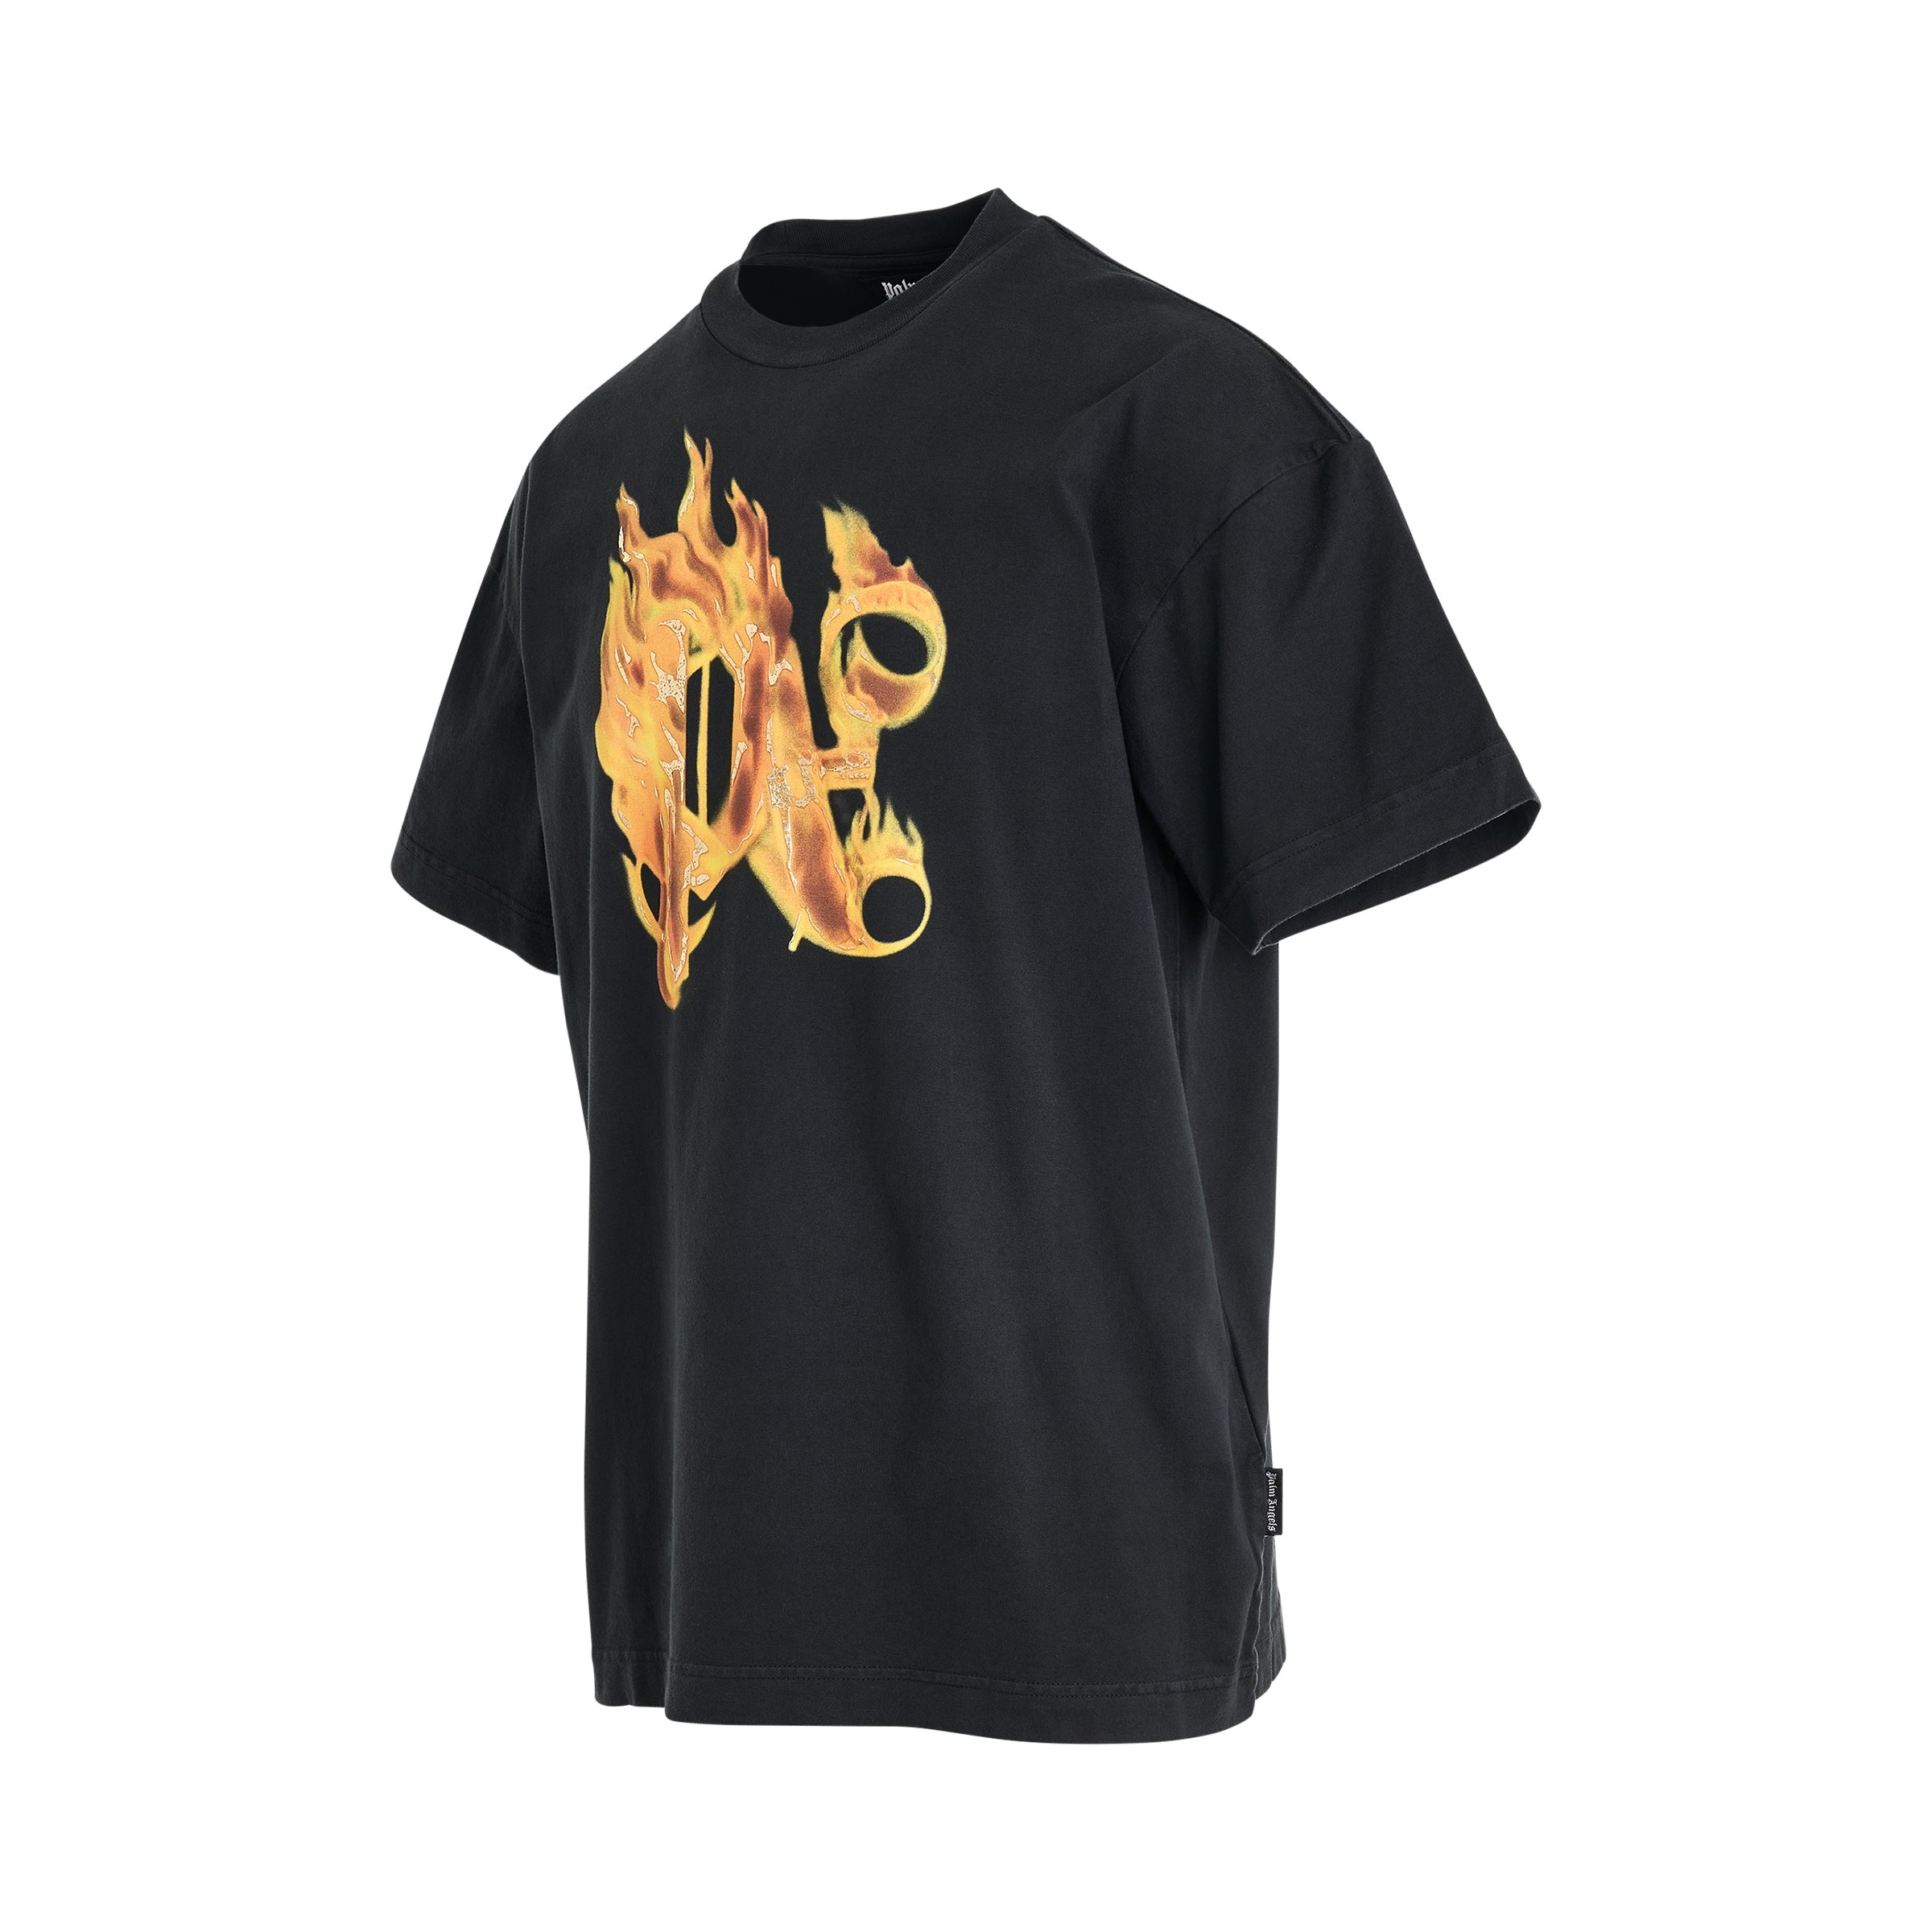 Burning Monogram T-Shirt in Black/Gold - 2